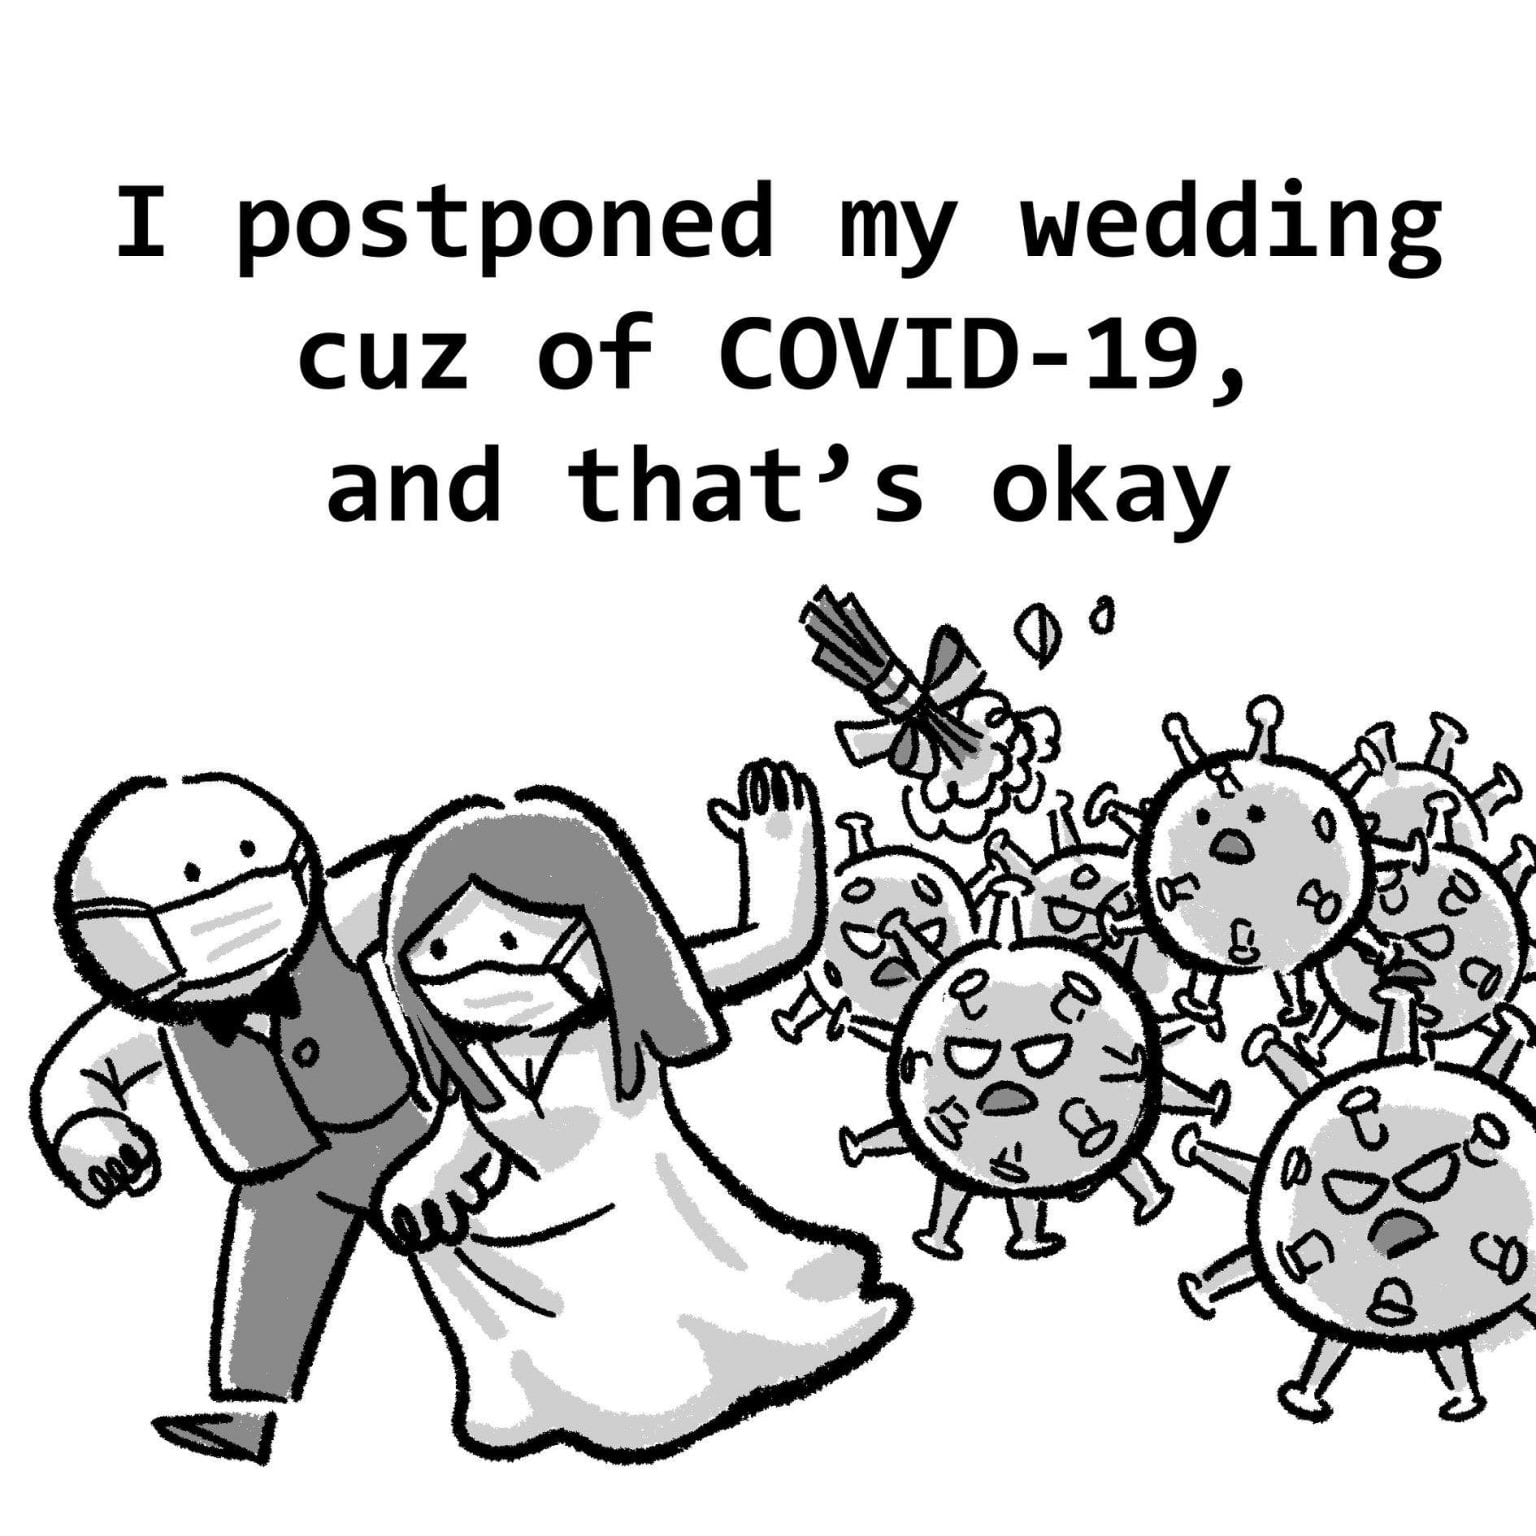 TWS comic on postponing wedding during COVID-19 pandemic